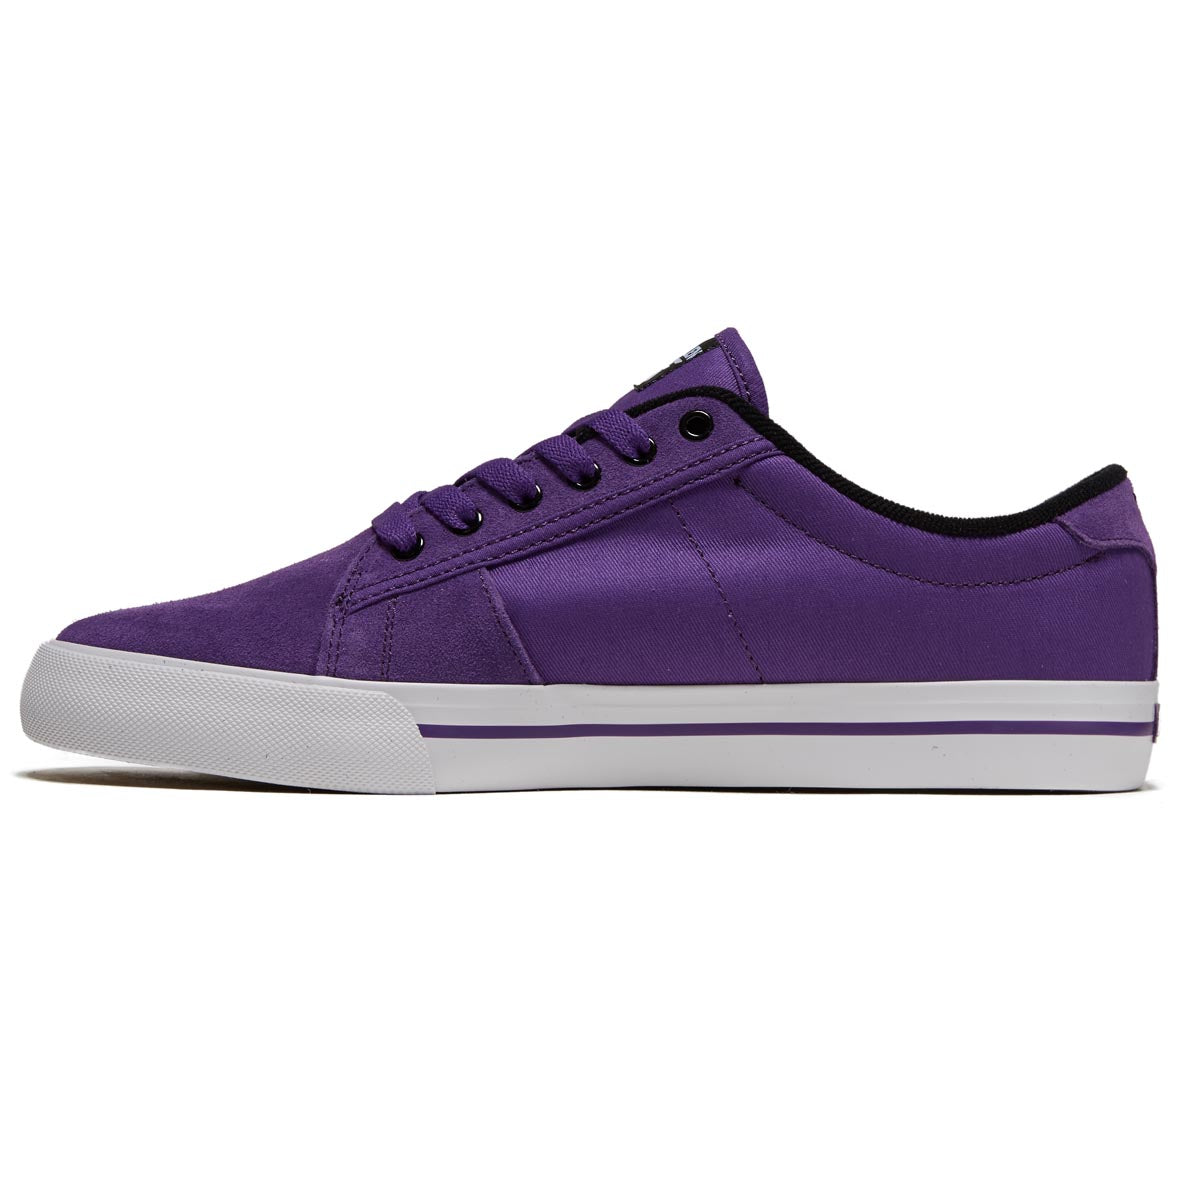 Fallen Bomber Shoes - Purple/White image 2